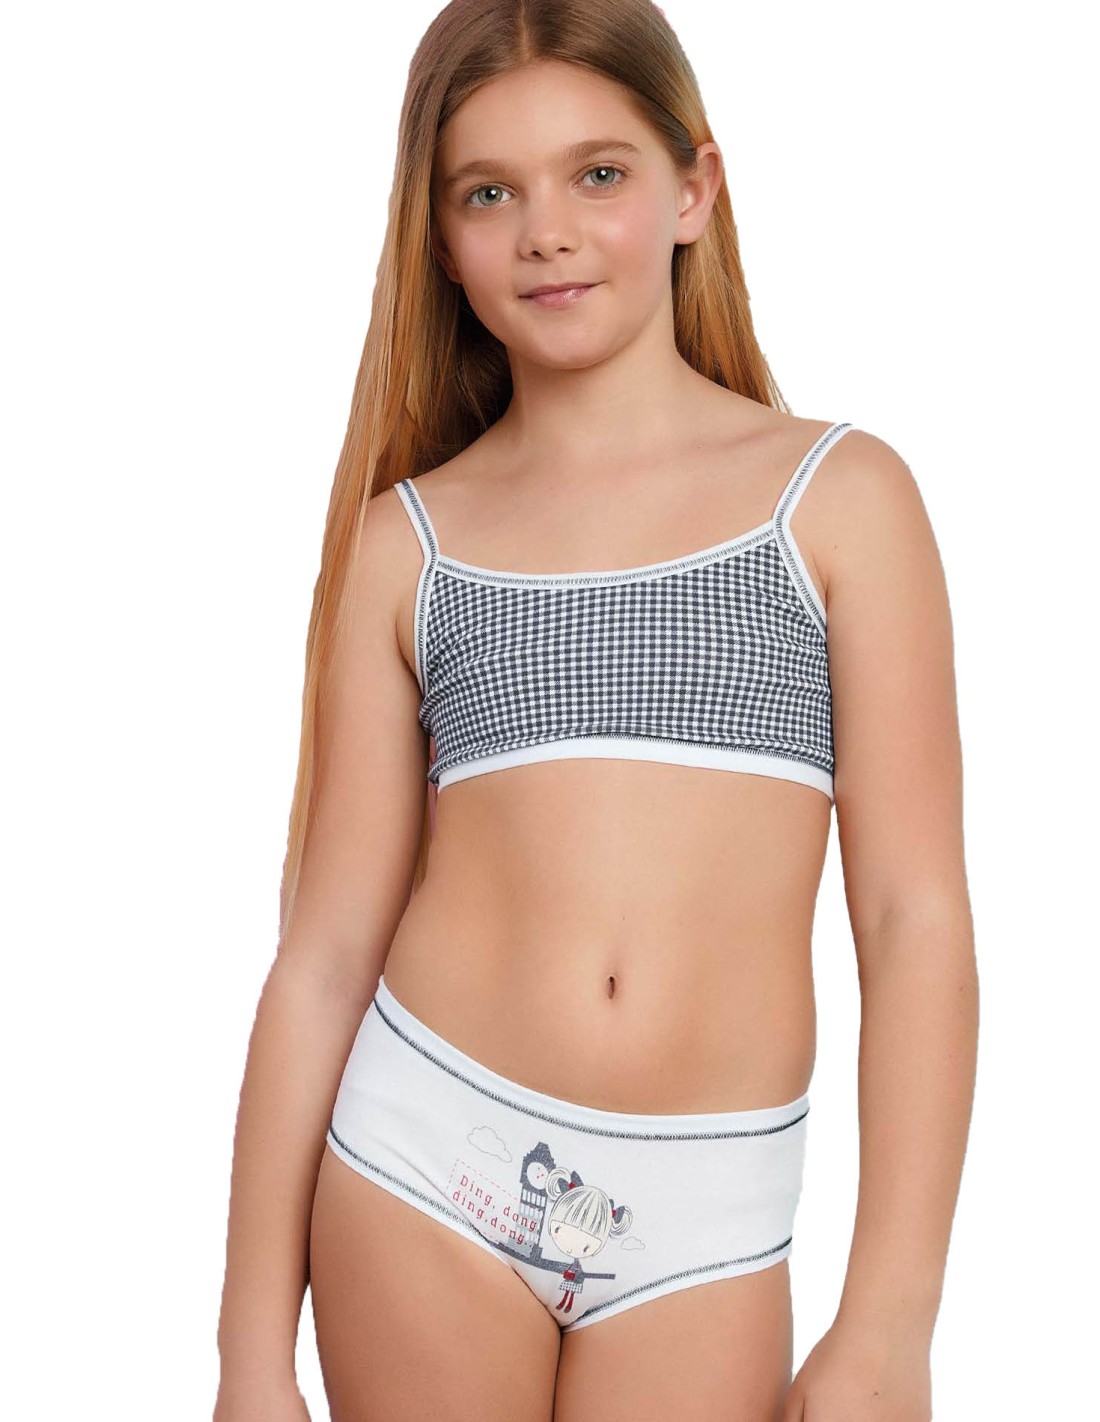 Jadea Complete baby girl underwear set Top Brassiere + Slip 376